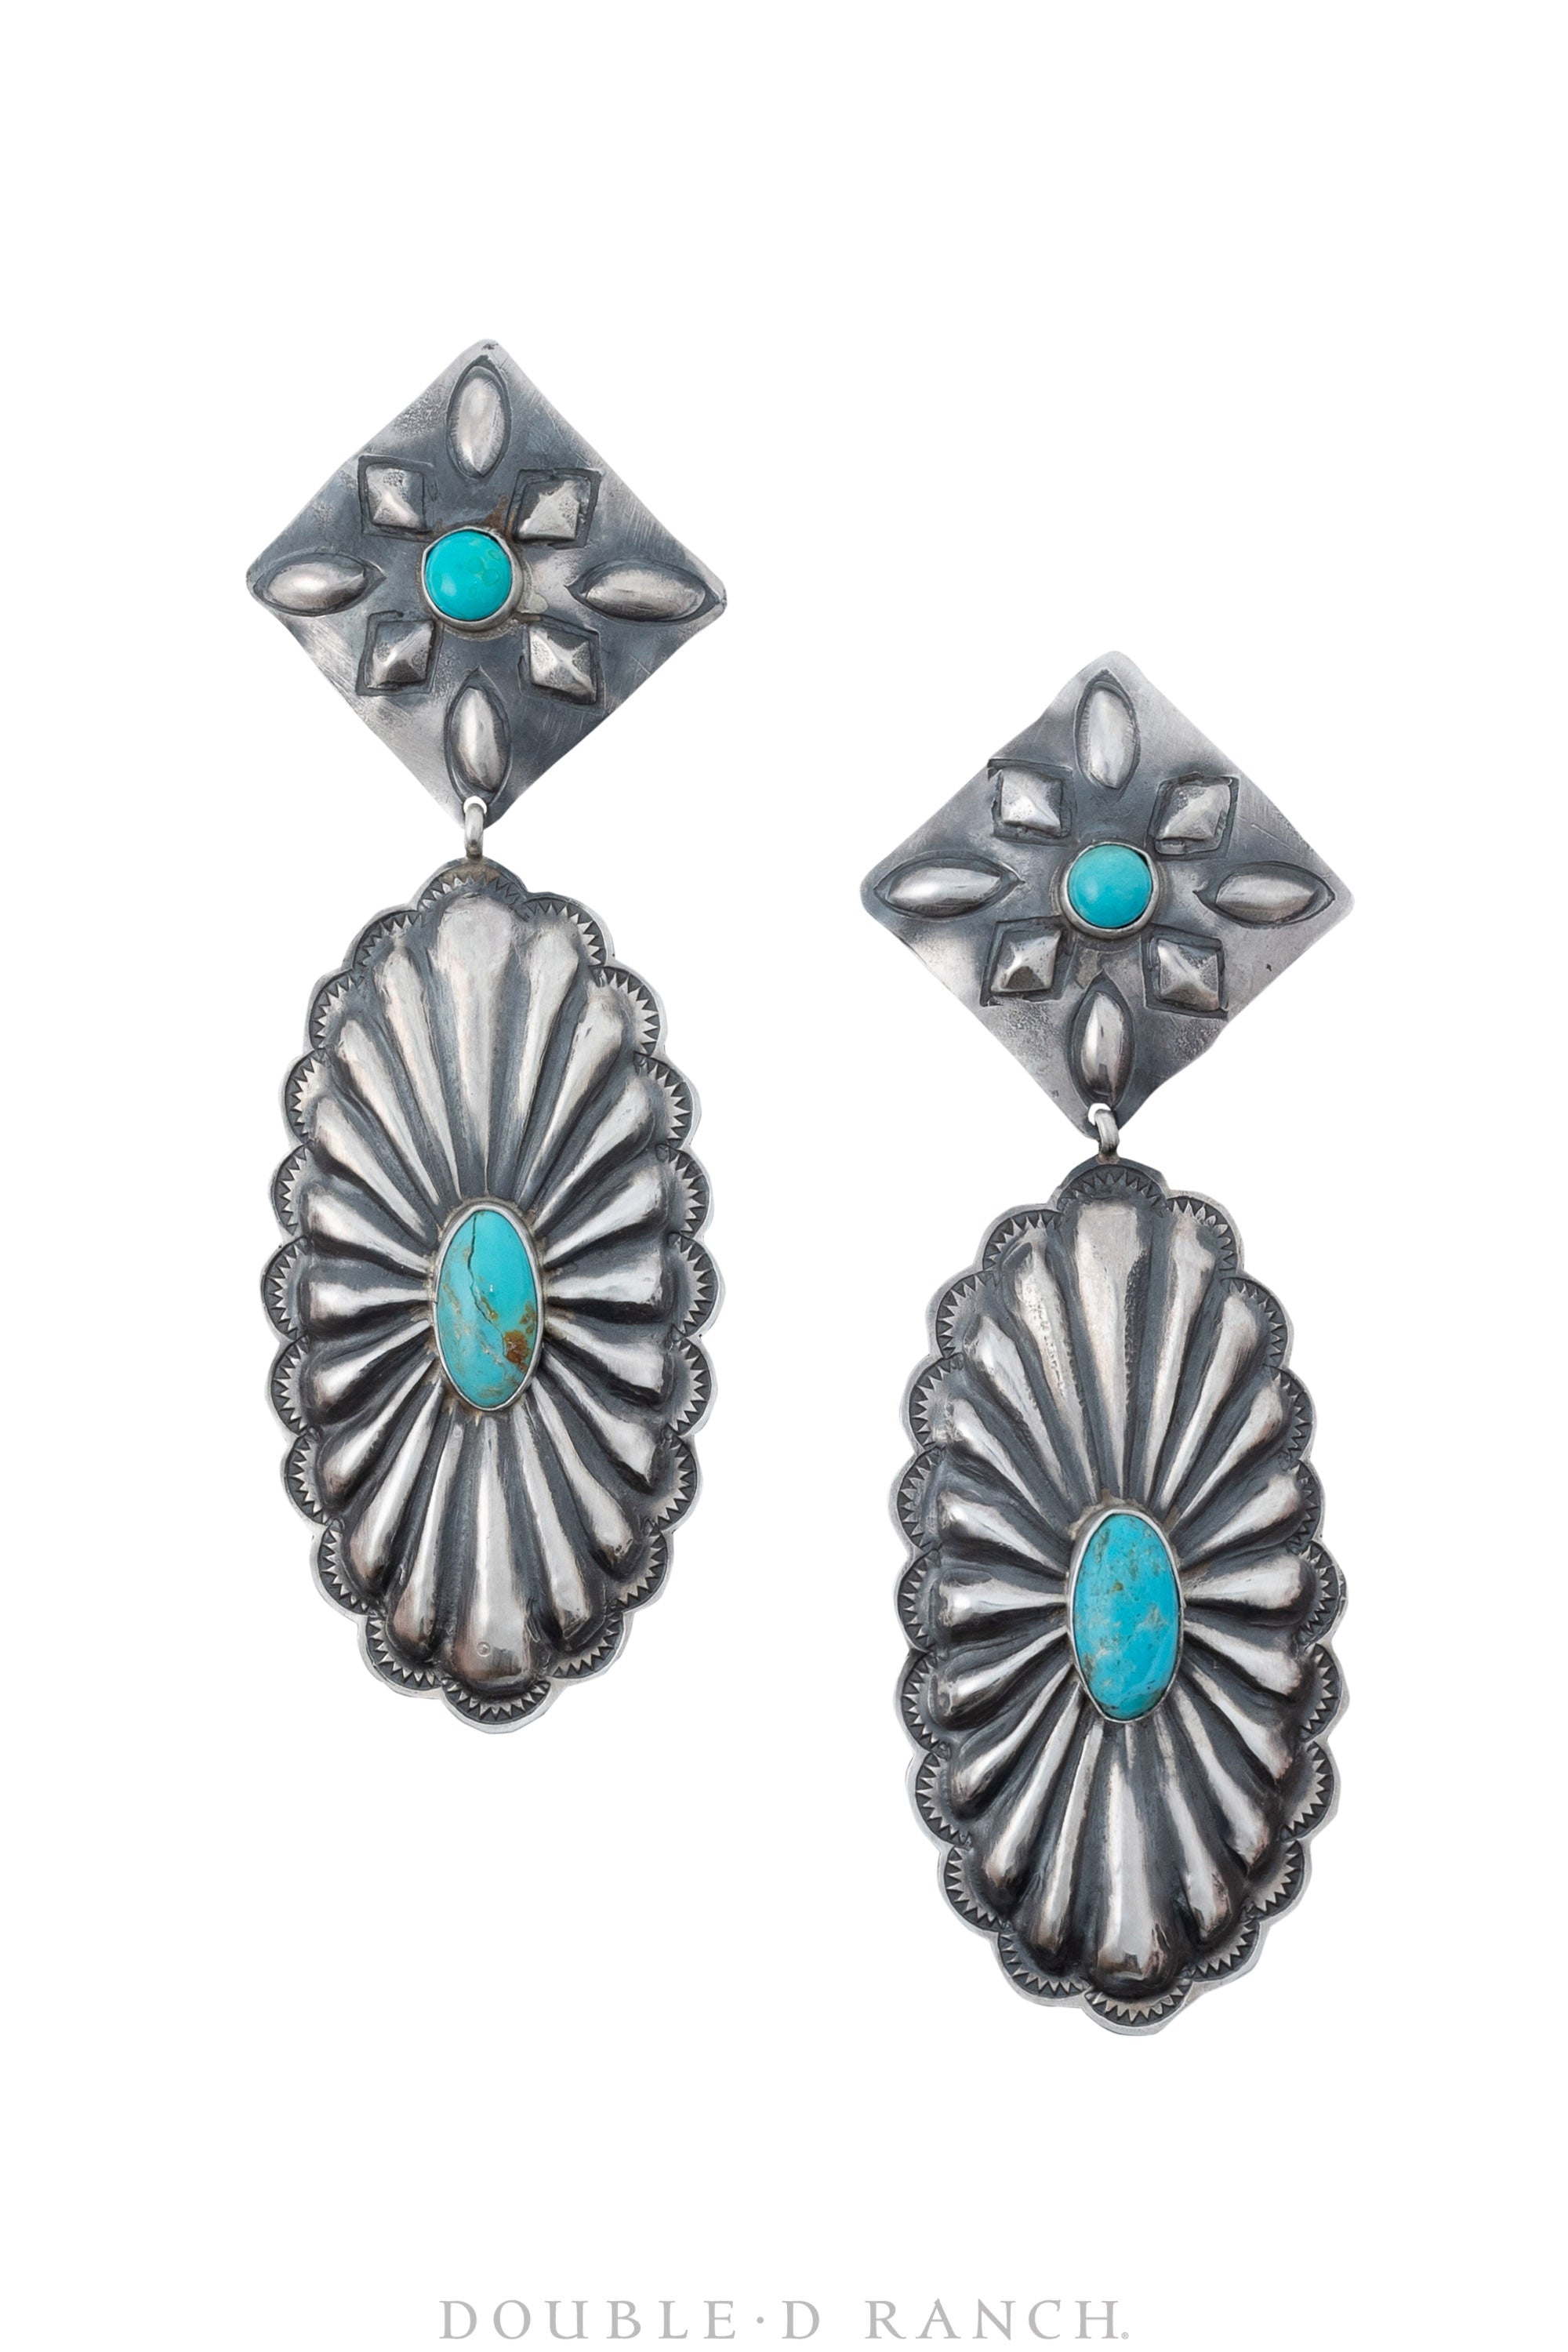 Earrings, Concho. Turquoise, Hallmark, 386